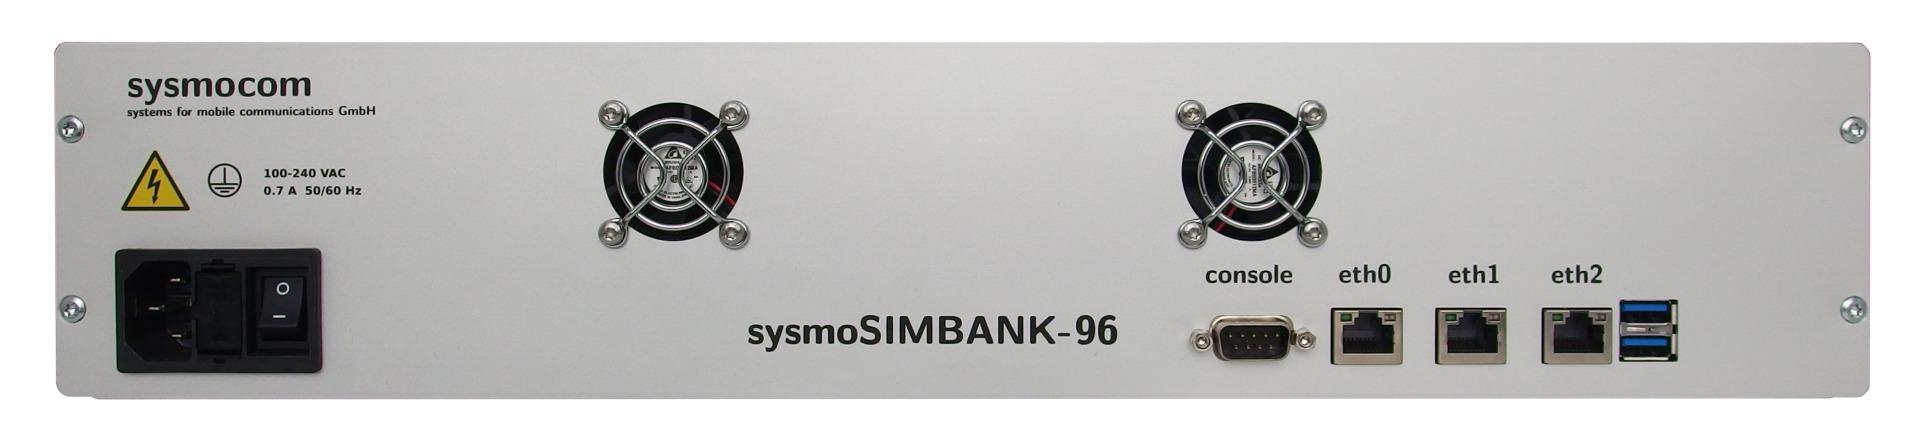 sysmoSIMBANK-96 back view